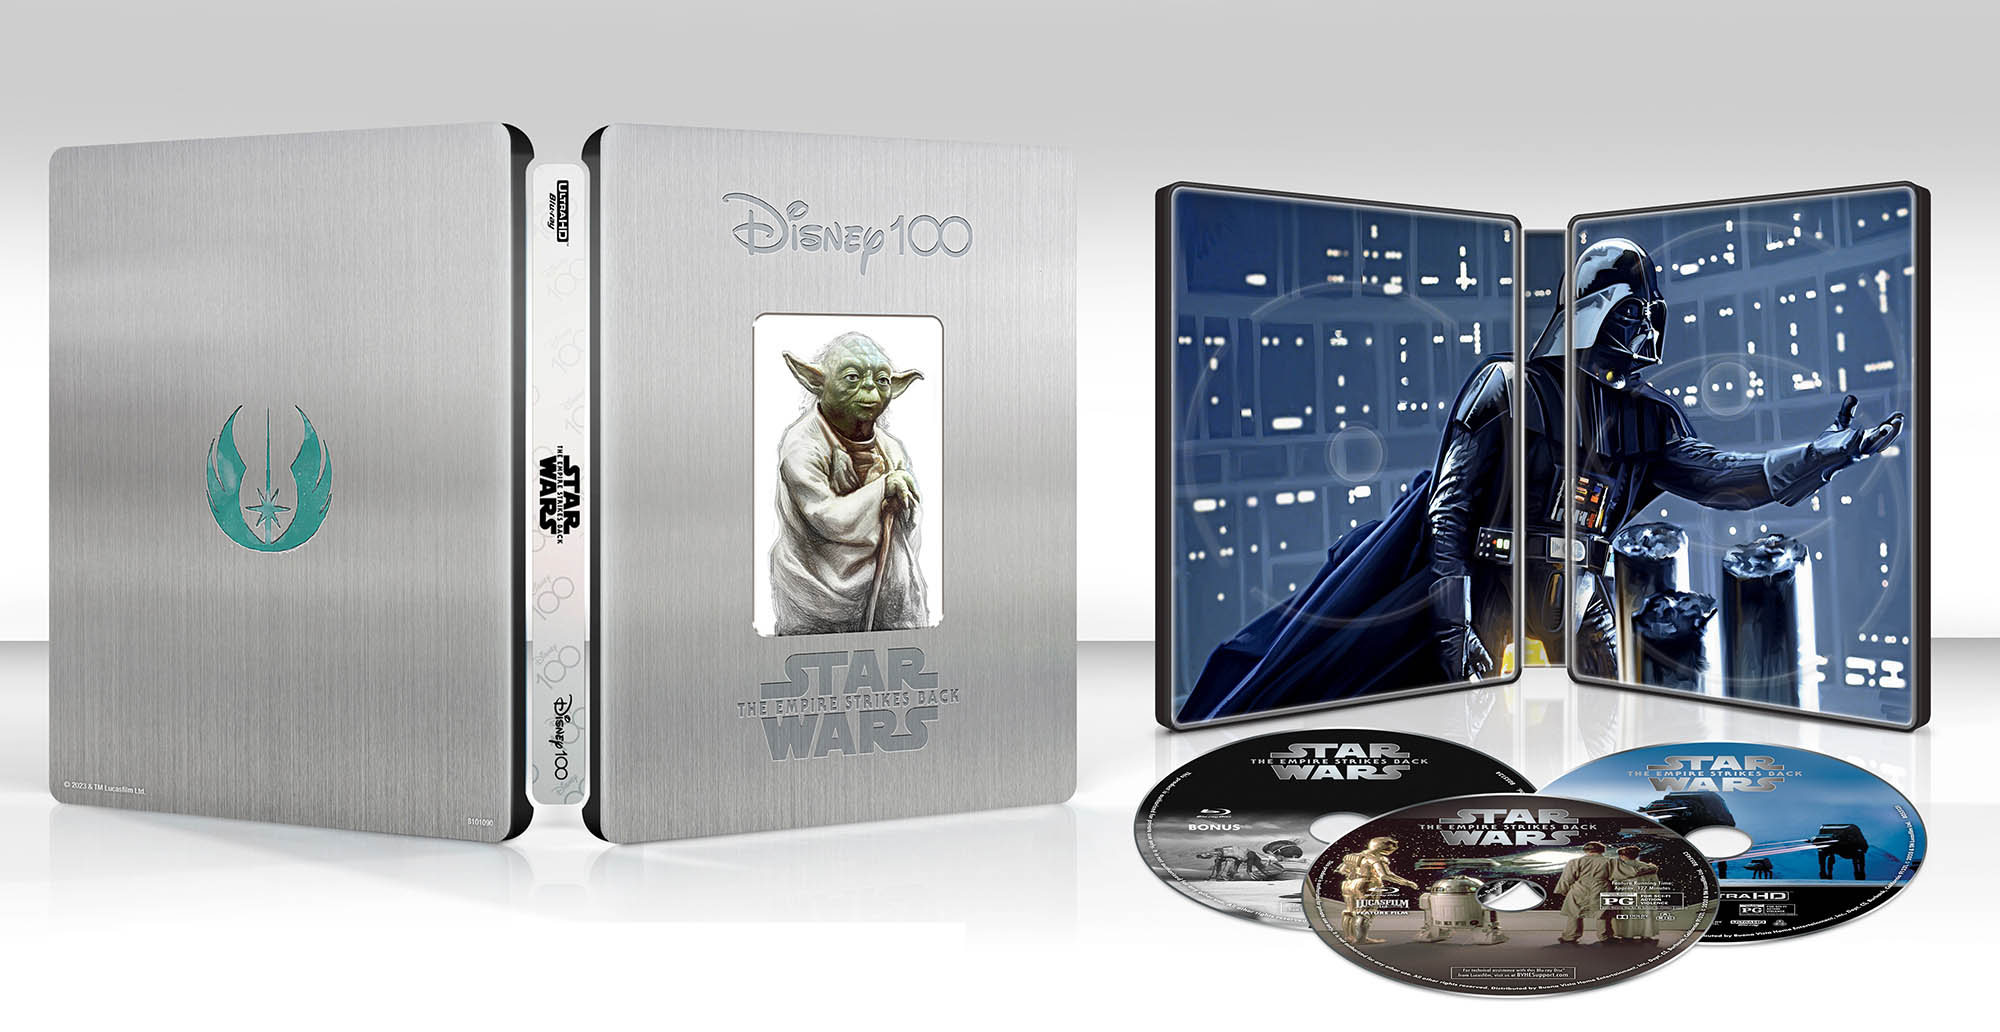 Star Wars: The Empire Strikes Back (1980) 4k Blu-ray SteelBook Edition